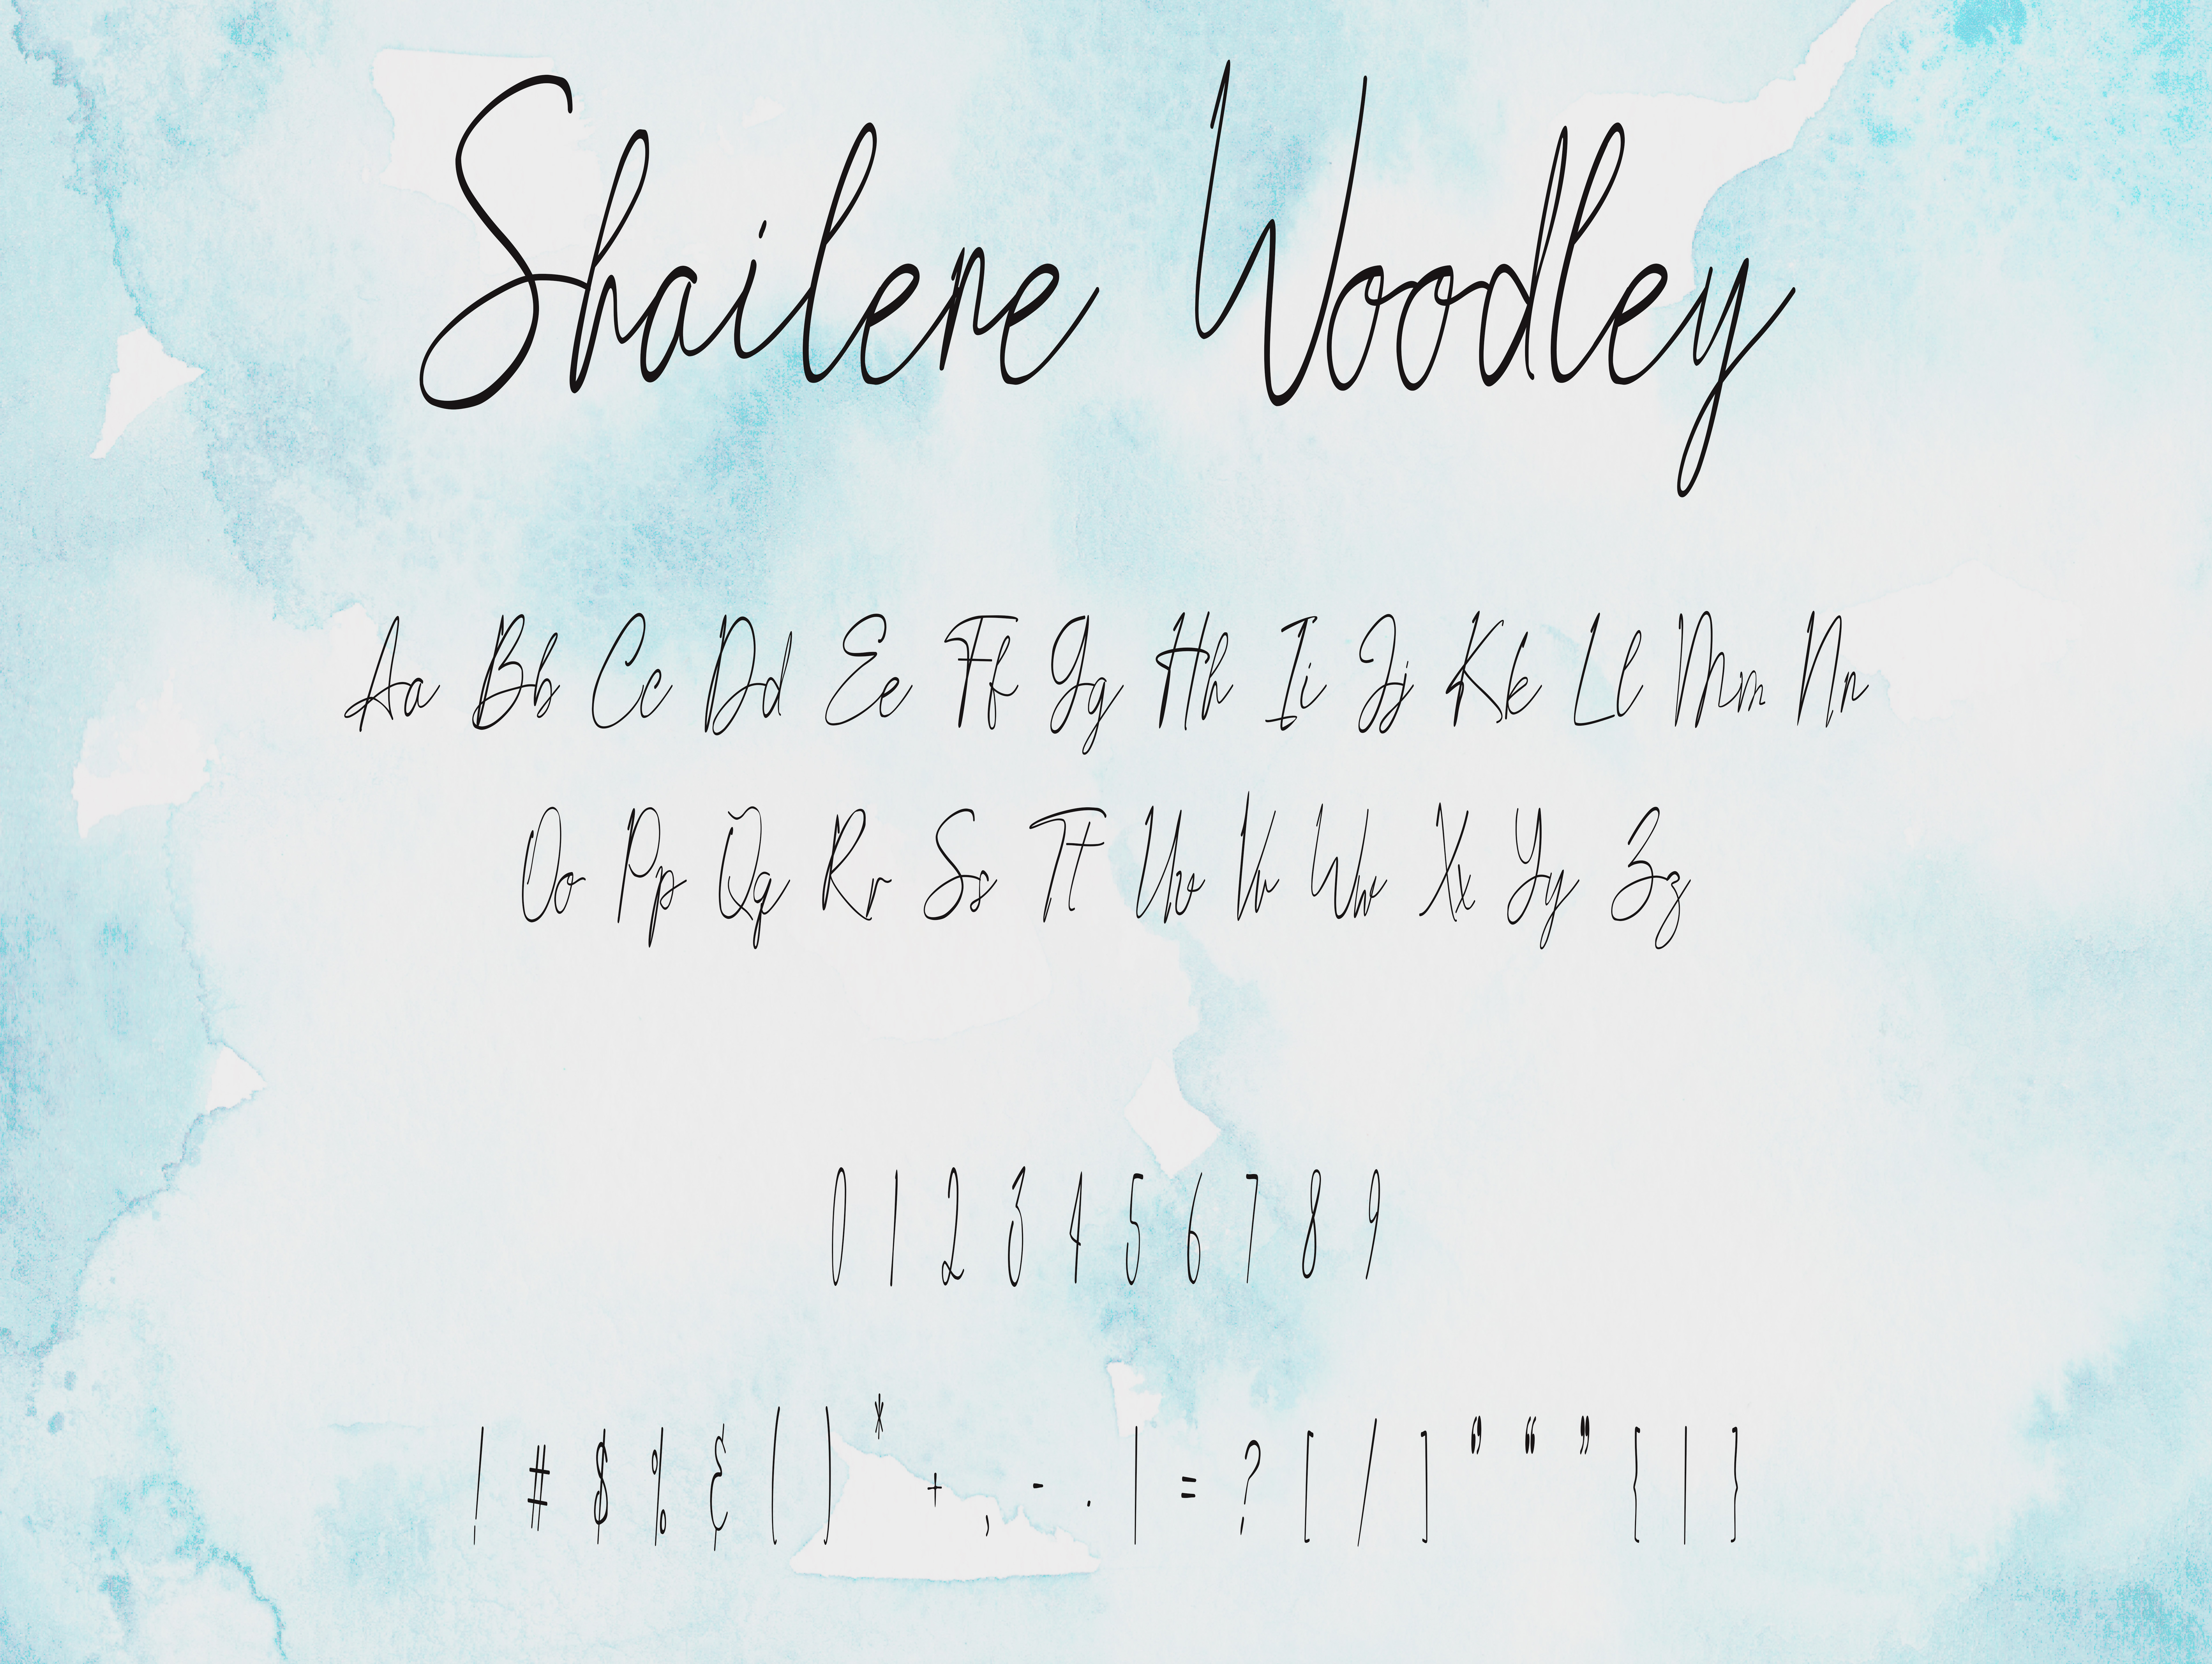 Shailene Woodley